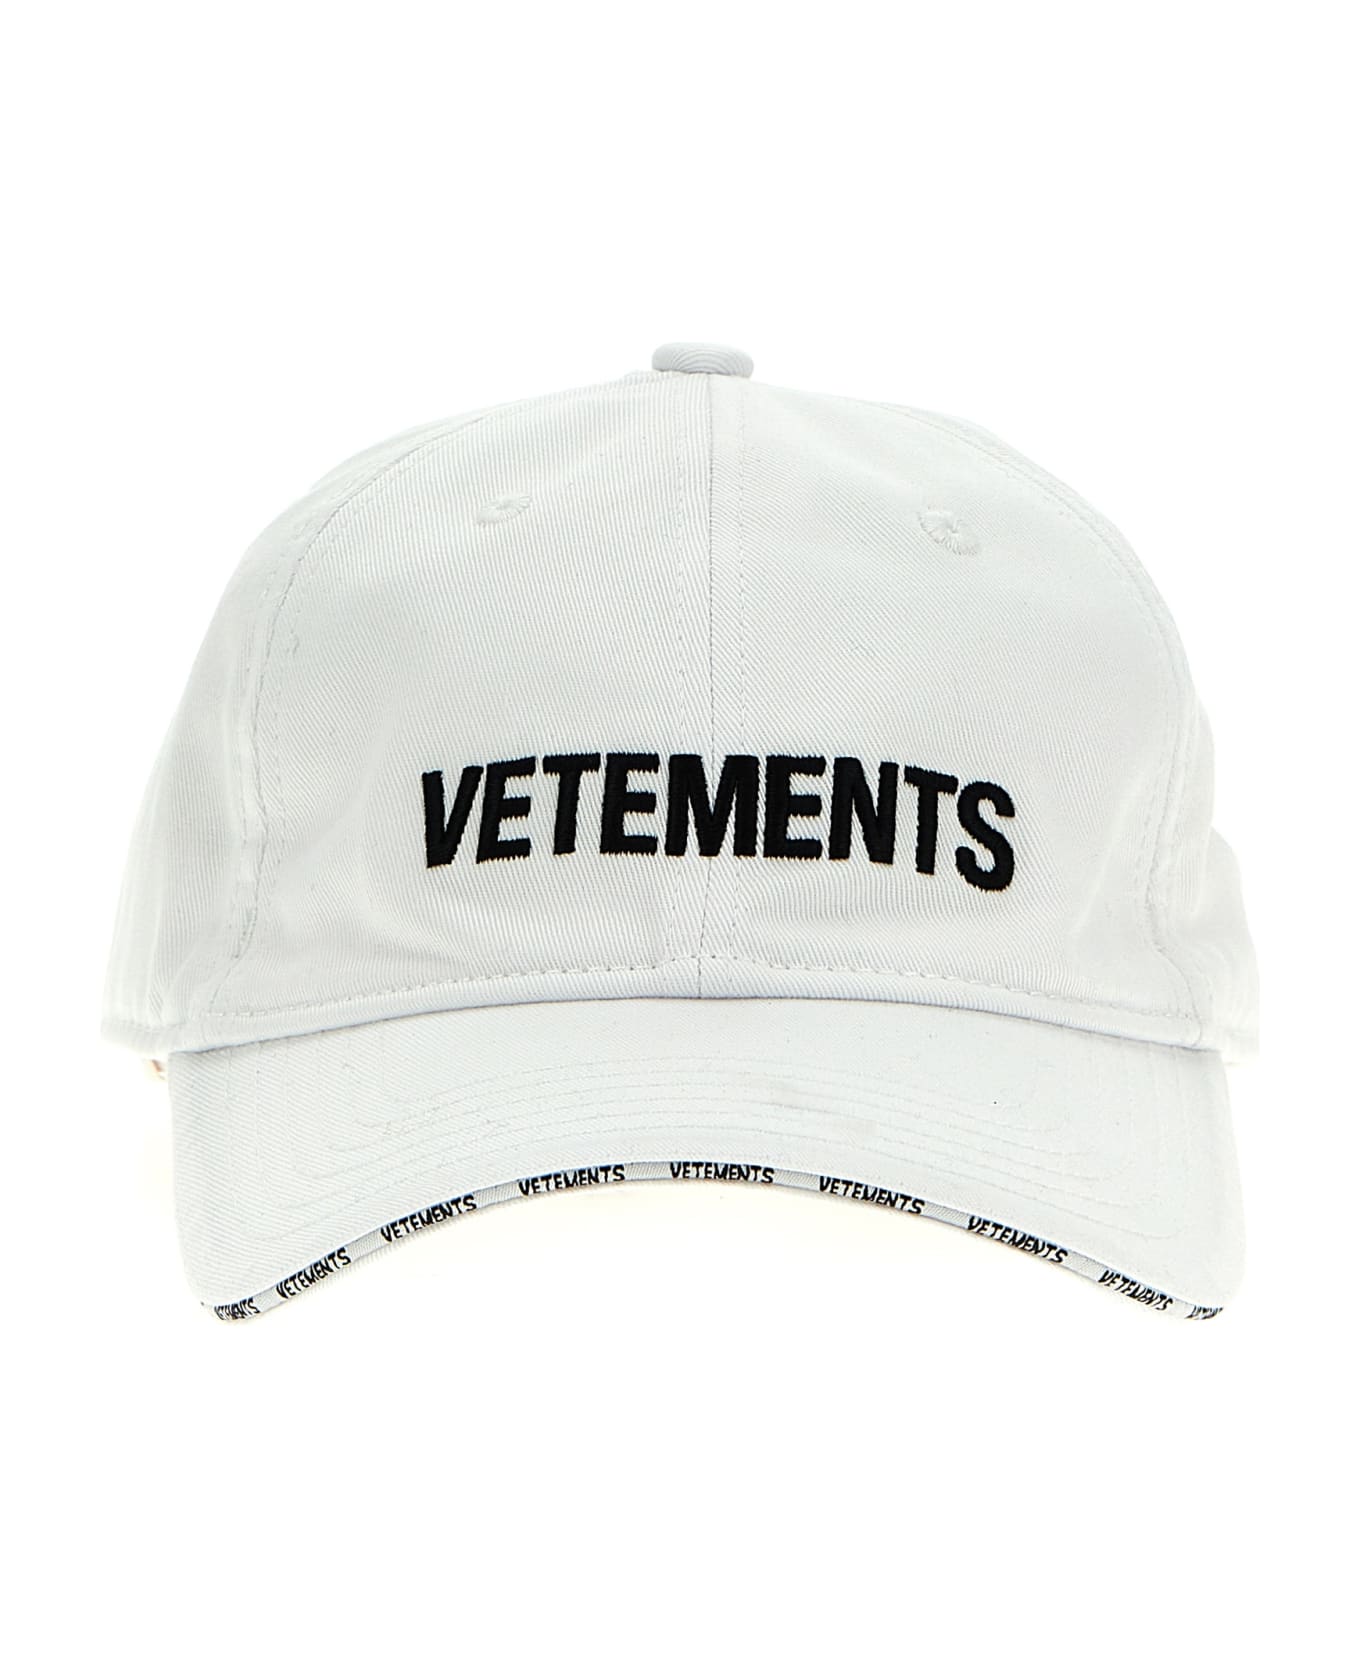 VETEMENTS Logo Cap - White/Black